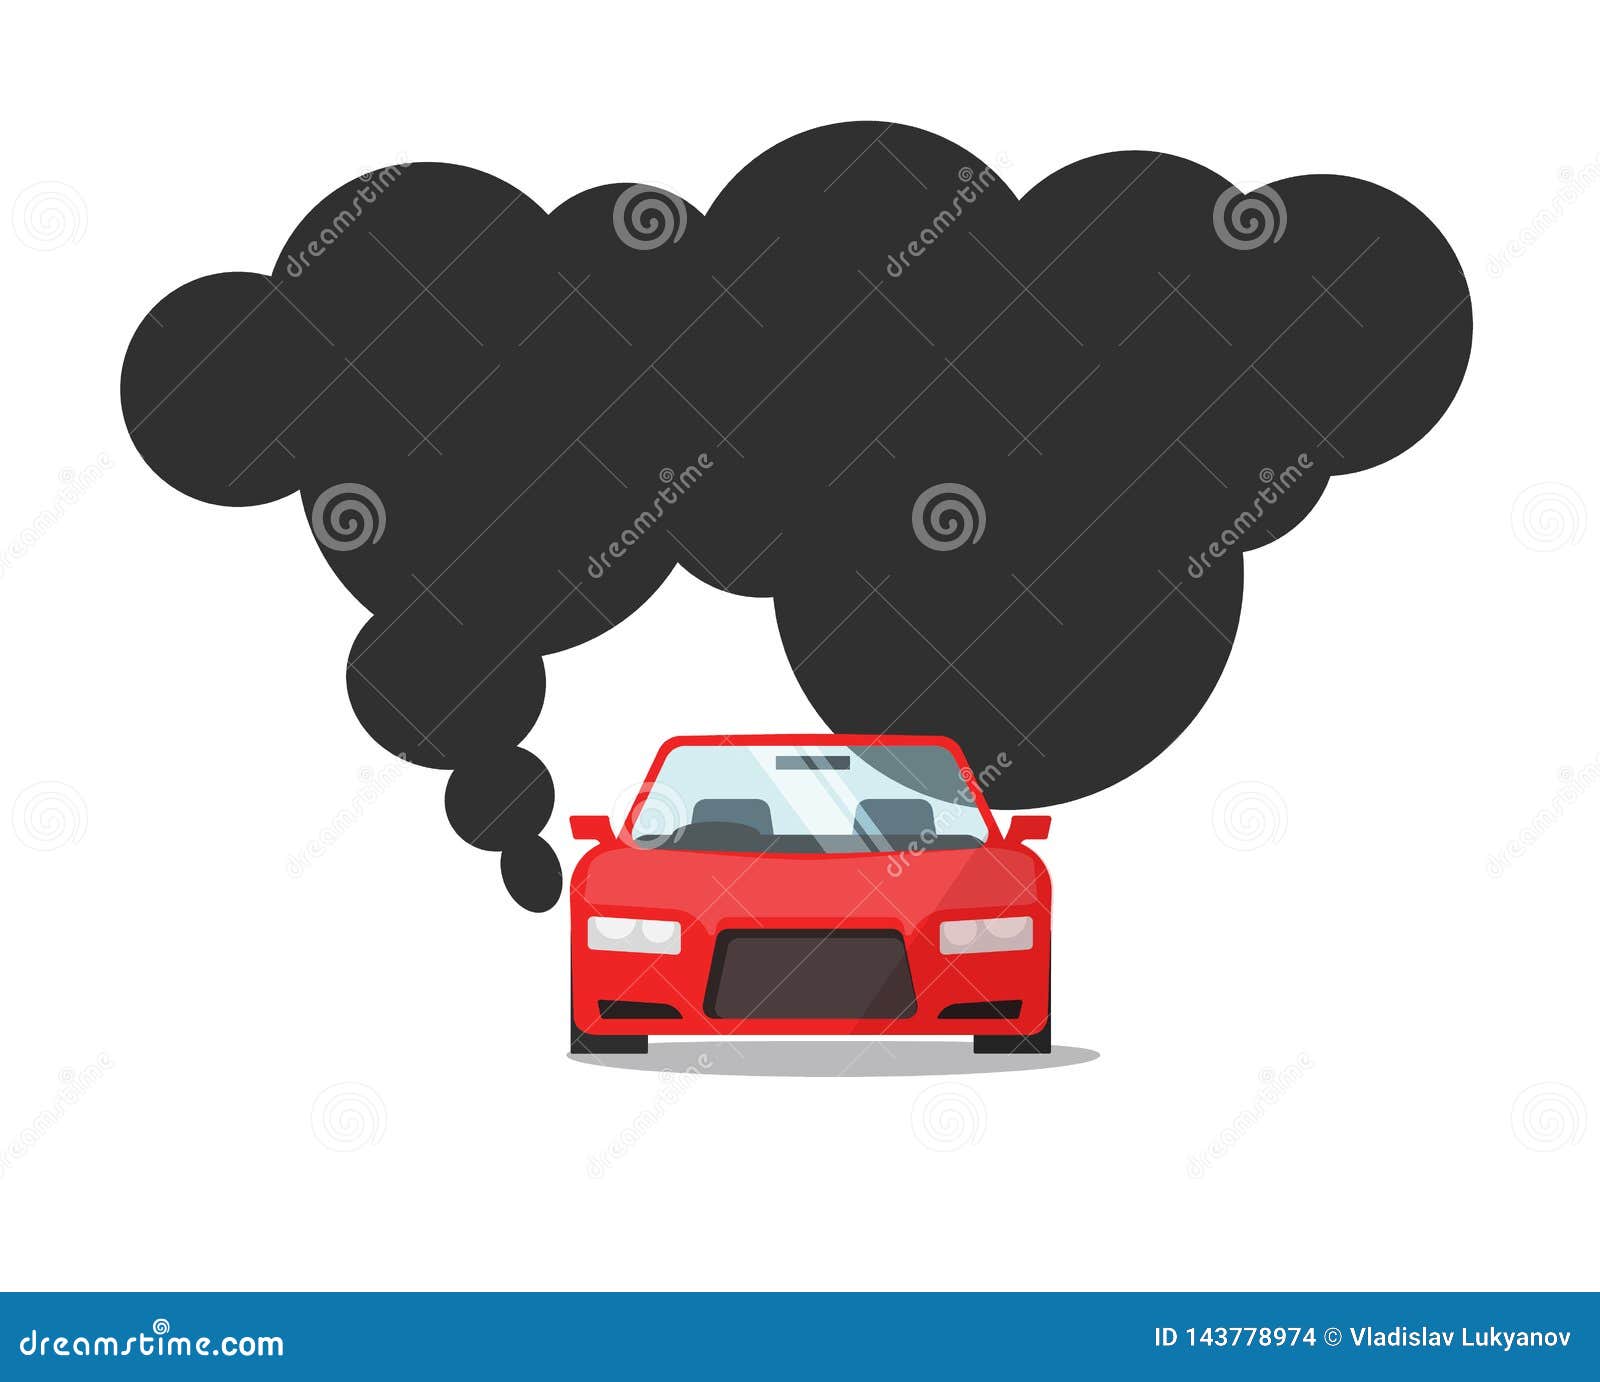 Emission CO2 of Automobile Fuel Vector Illustration, Flat Cartoon Car with  Big Smoke Cloud Gas, Concept of Carbon Stock Vector - Illustration of  black, smog: 143778974